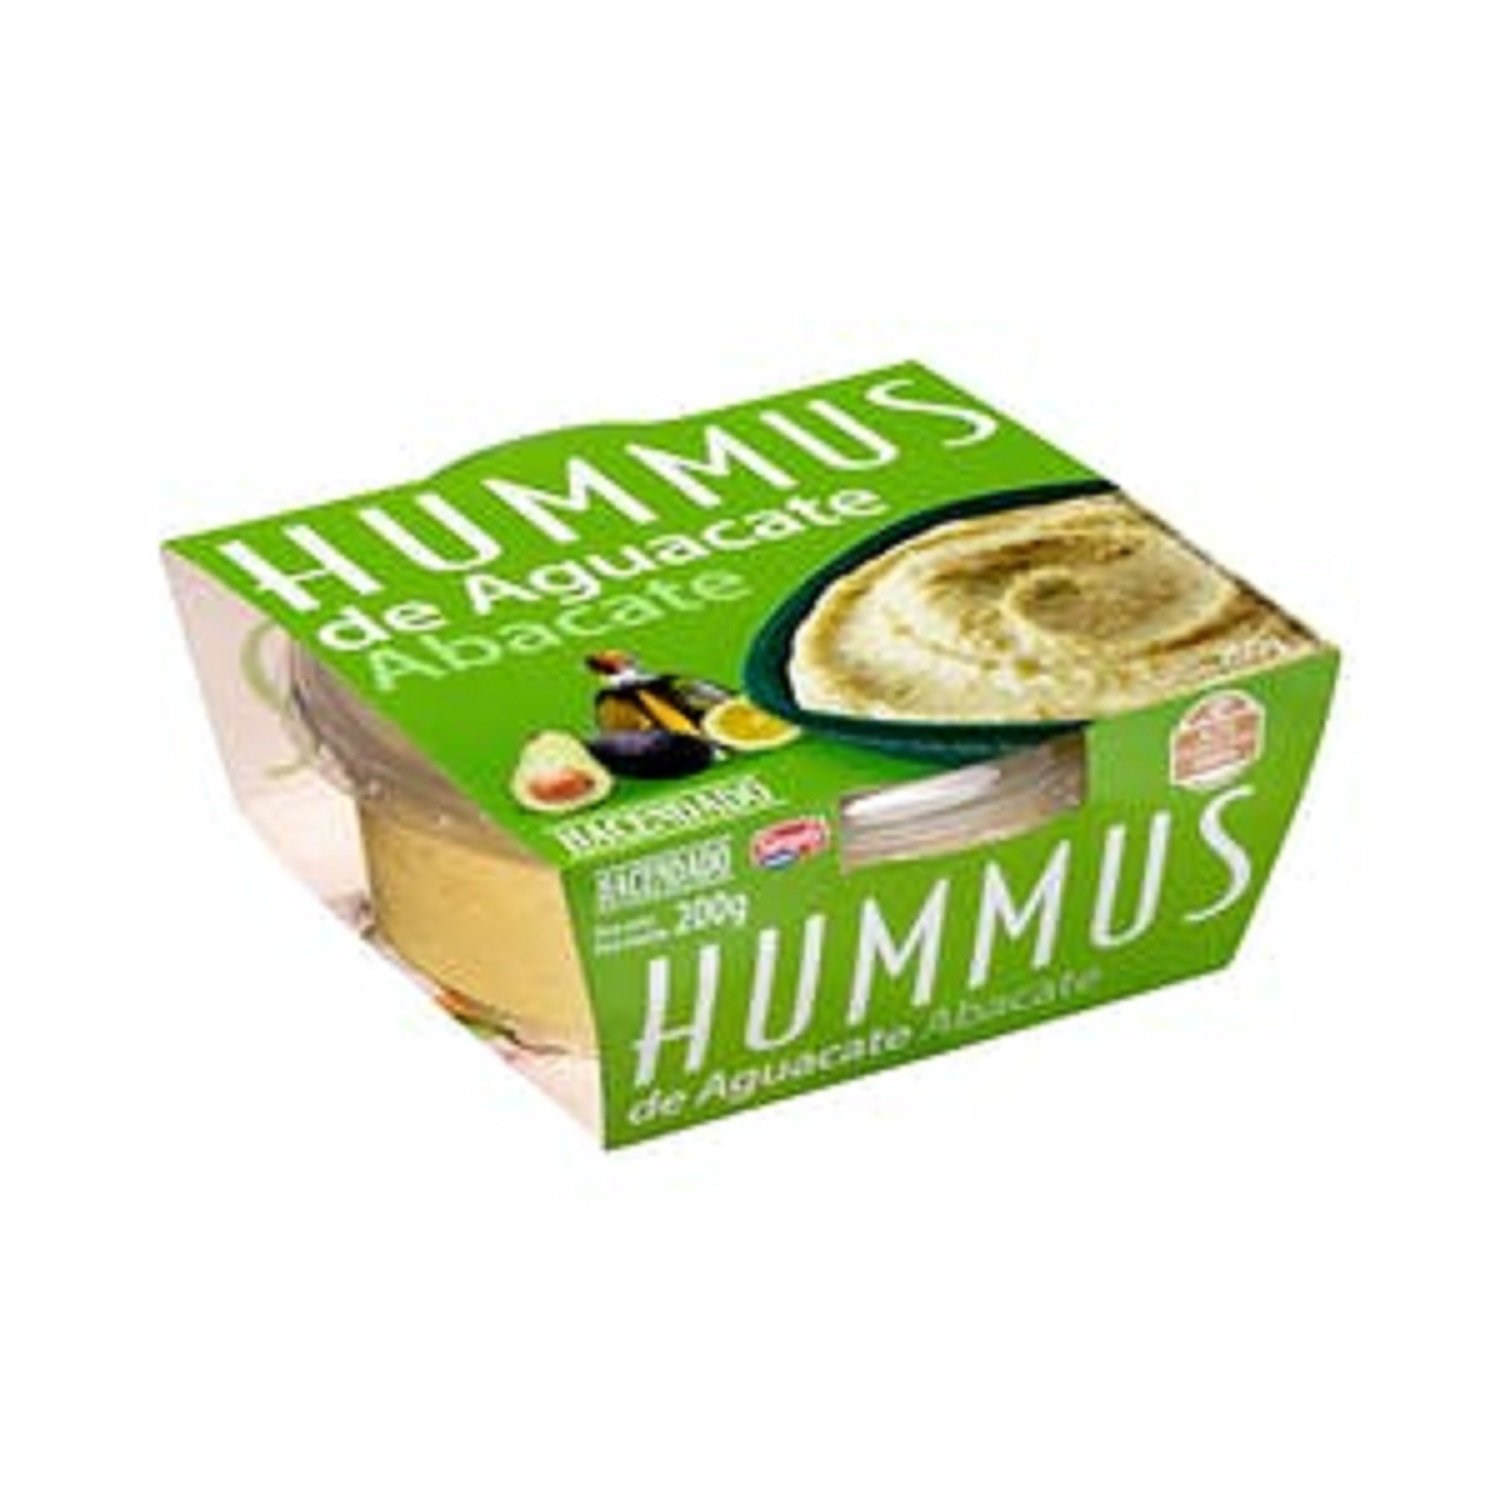 Hummus Aguacate / Mercadona